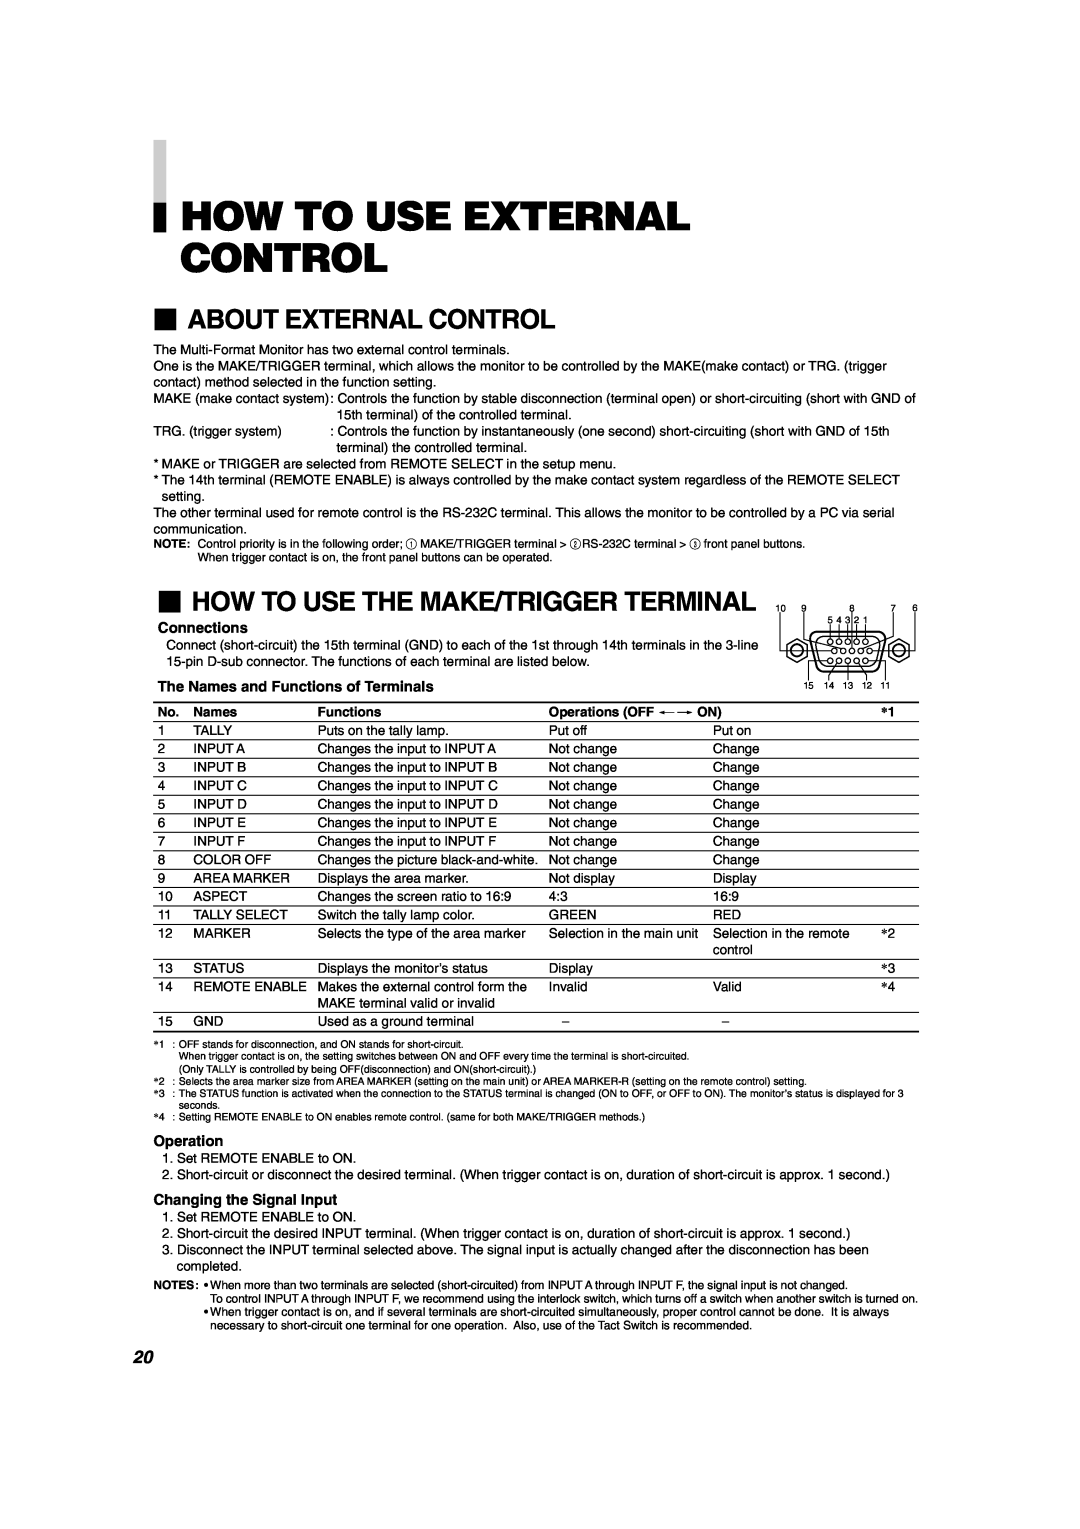 JVC DT-V1900CG manual How To Use External Control, About External Control, How To Use The Make/Trigger Terminal 